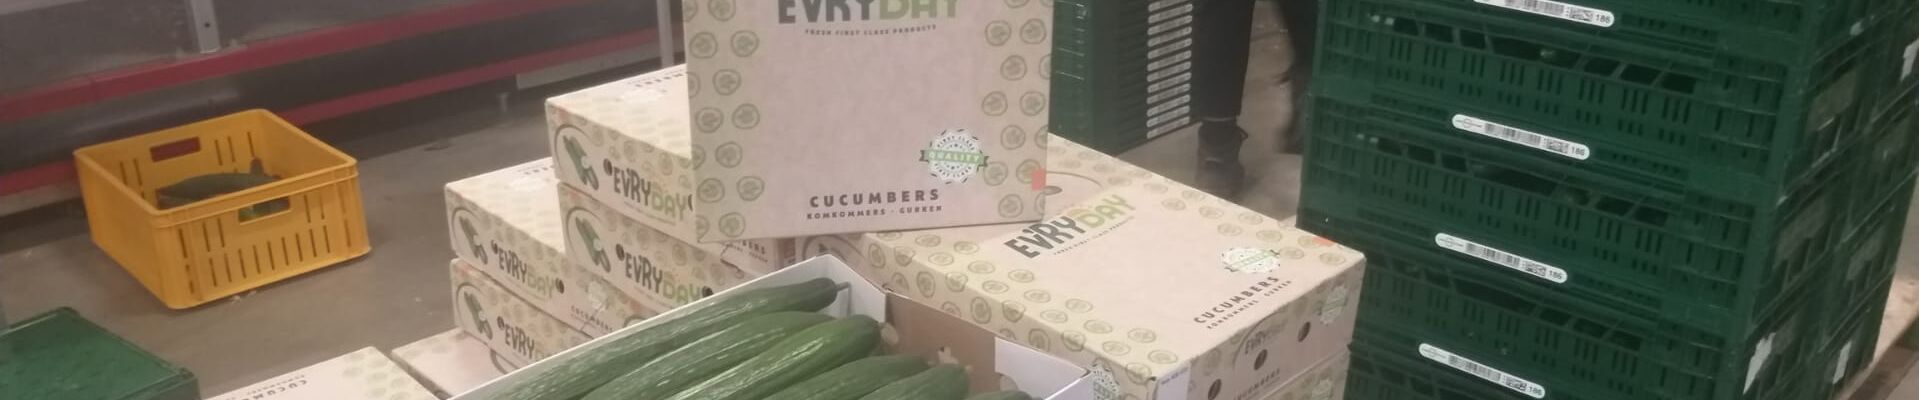 Hoe komkommerteler Multigrow Grashoek BV onderneemt in uitdagende tijden